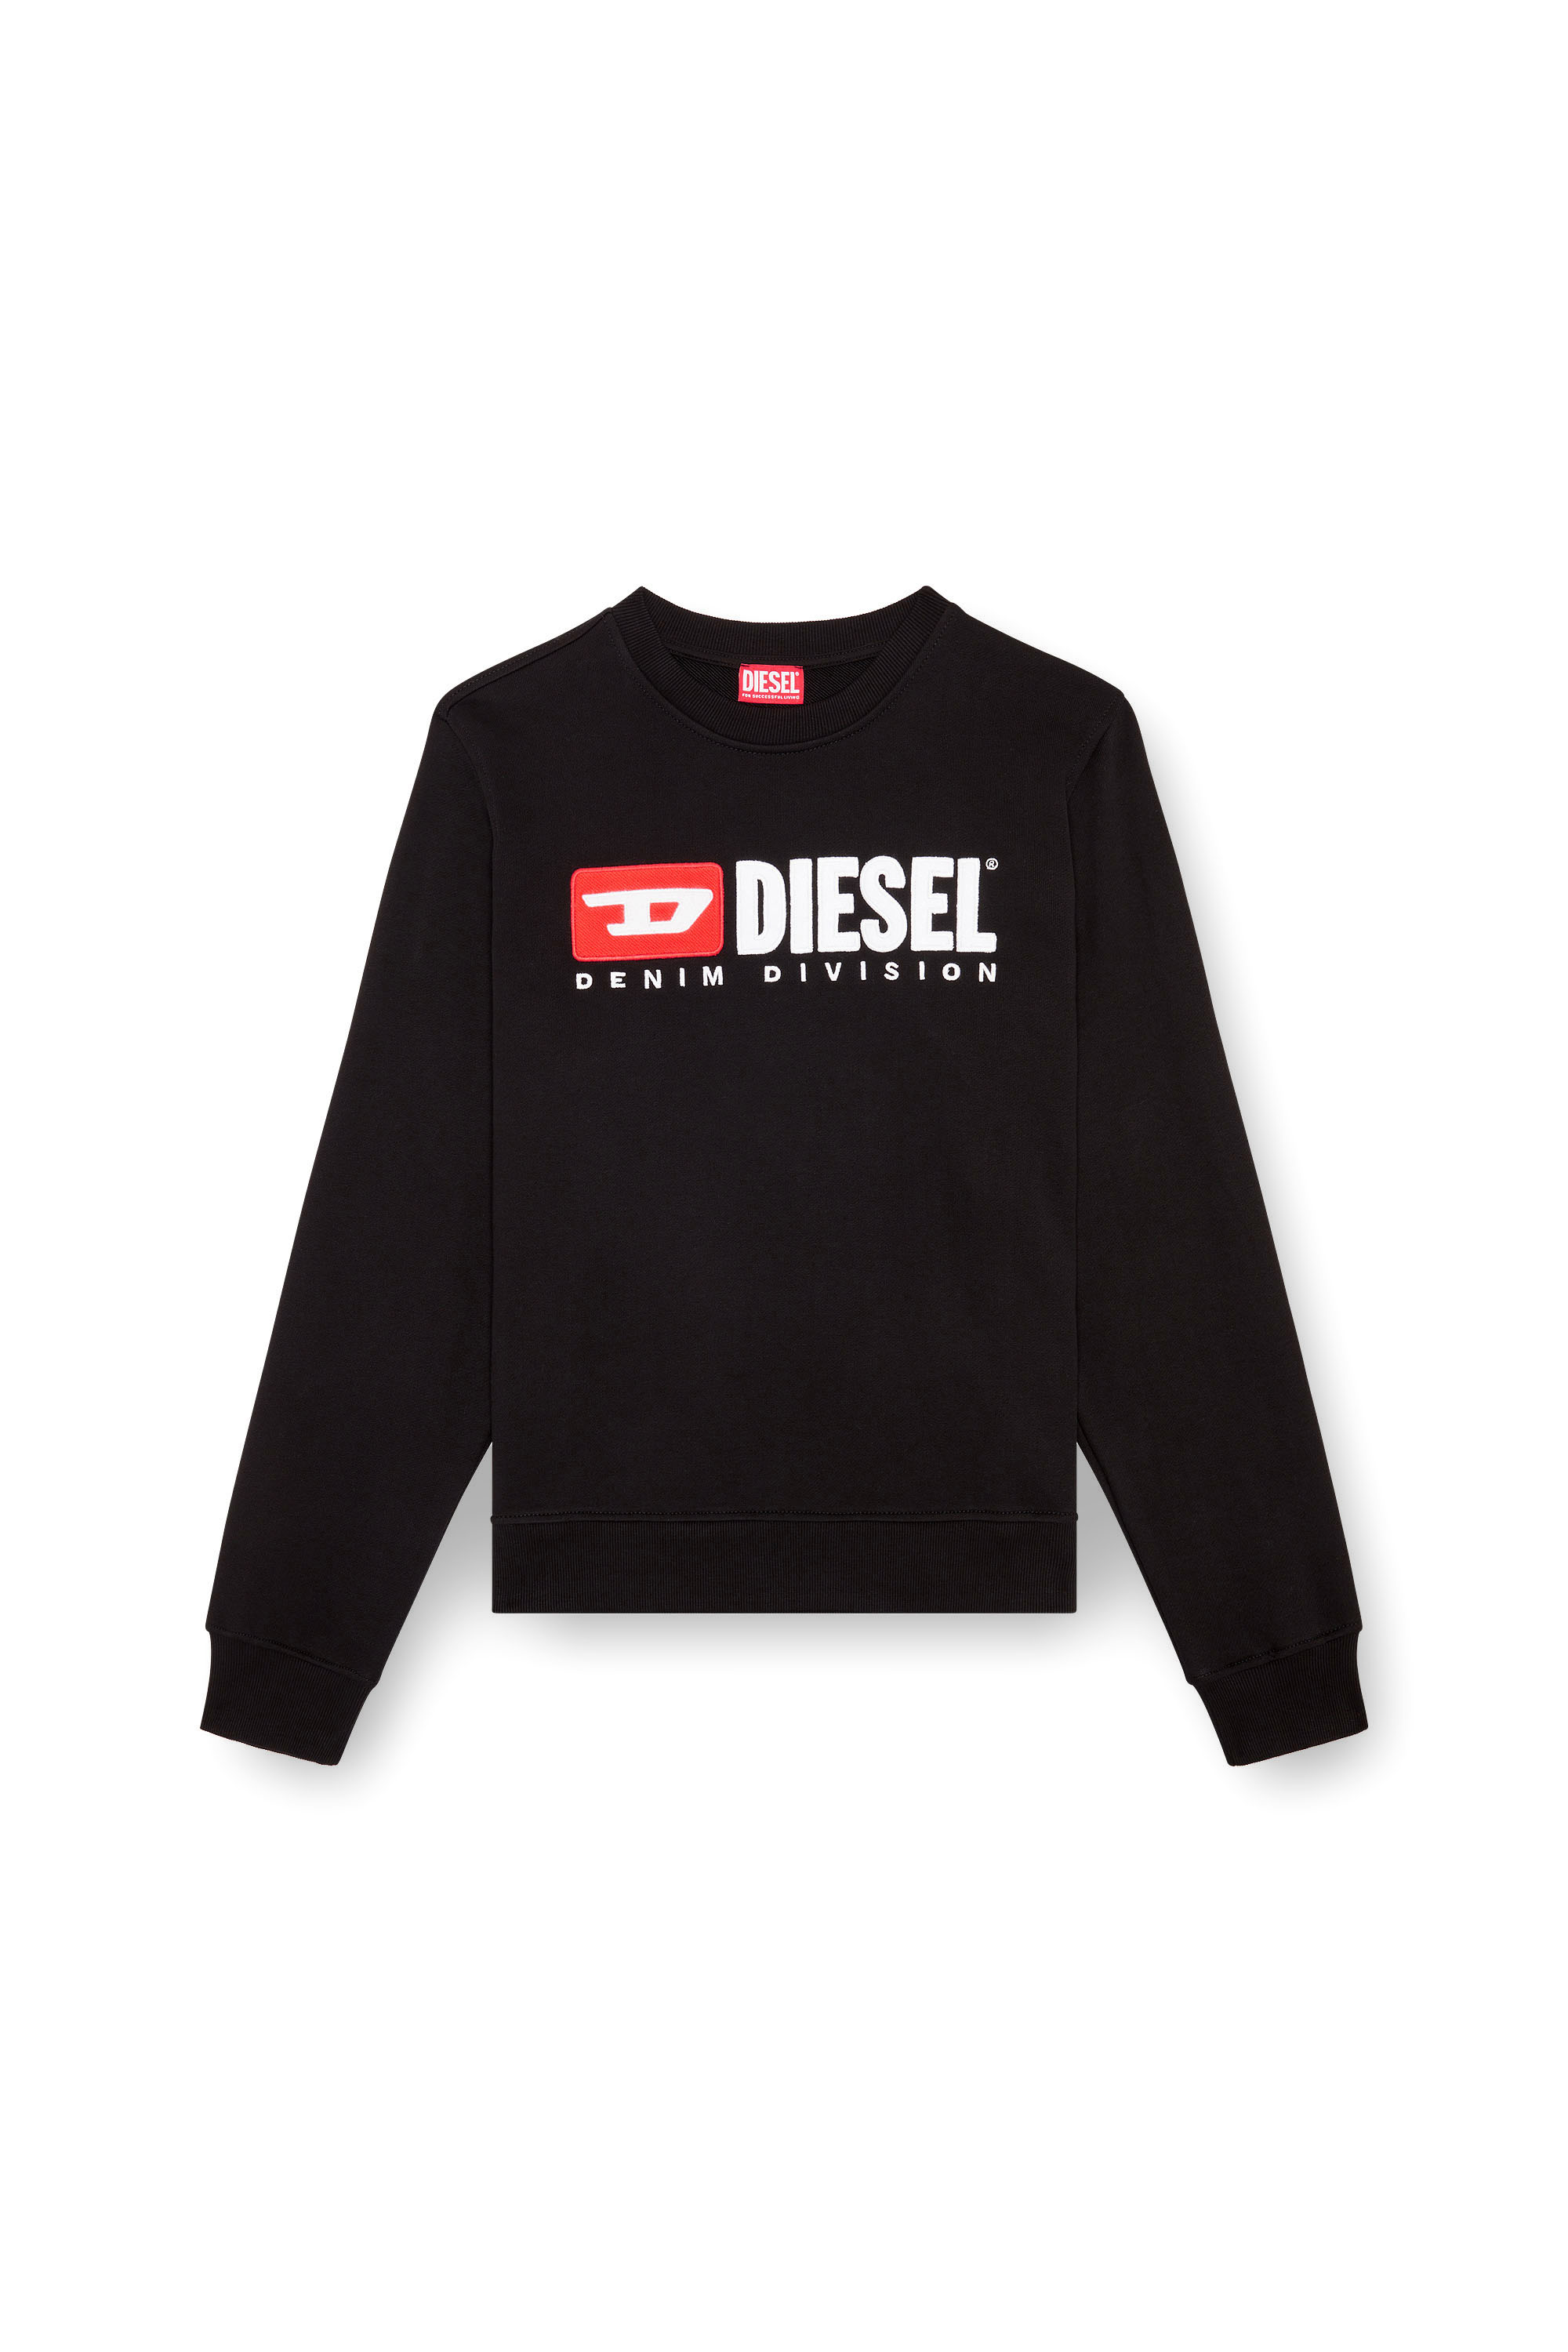 Diesel - S-BOXT-DIV, Homme Sweat-shirt avec logo Denim Division in Noir - Image 3